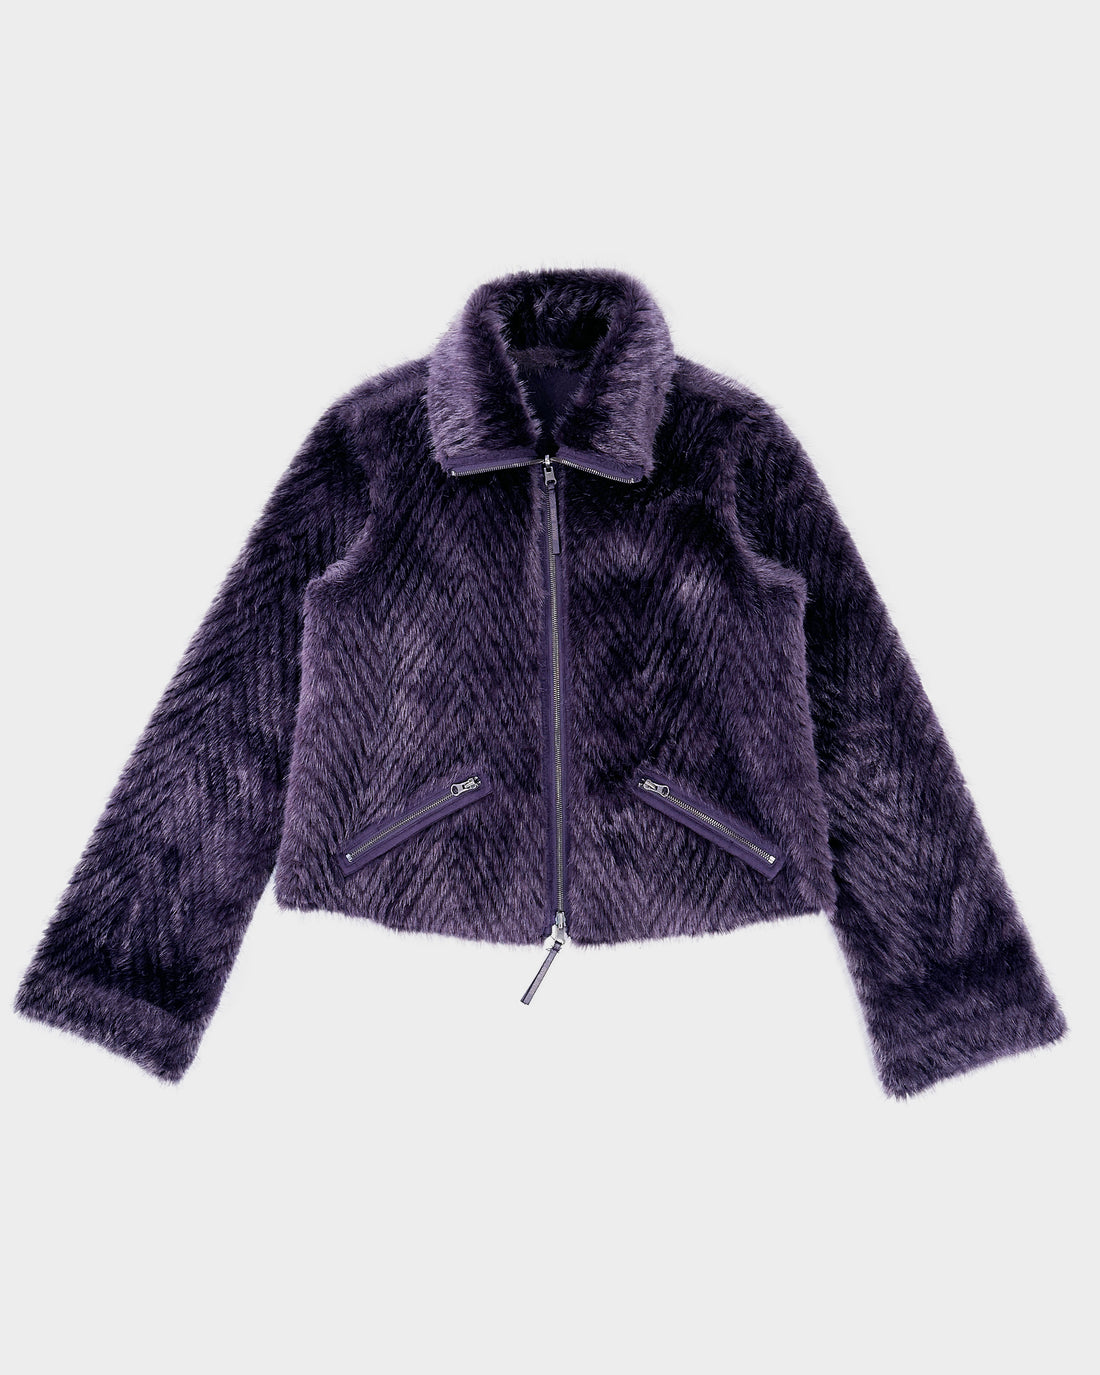 Armani Reversible Purple Fur Jacket 2000's